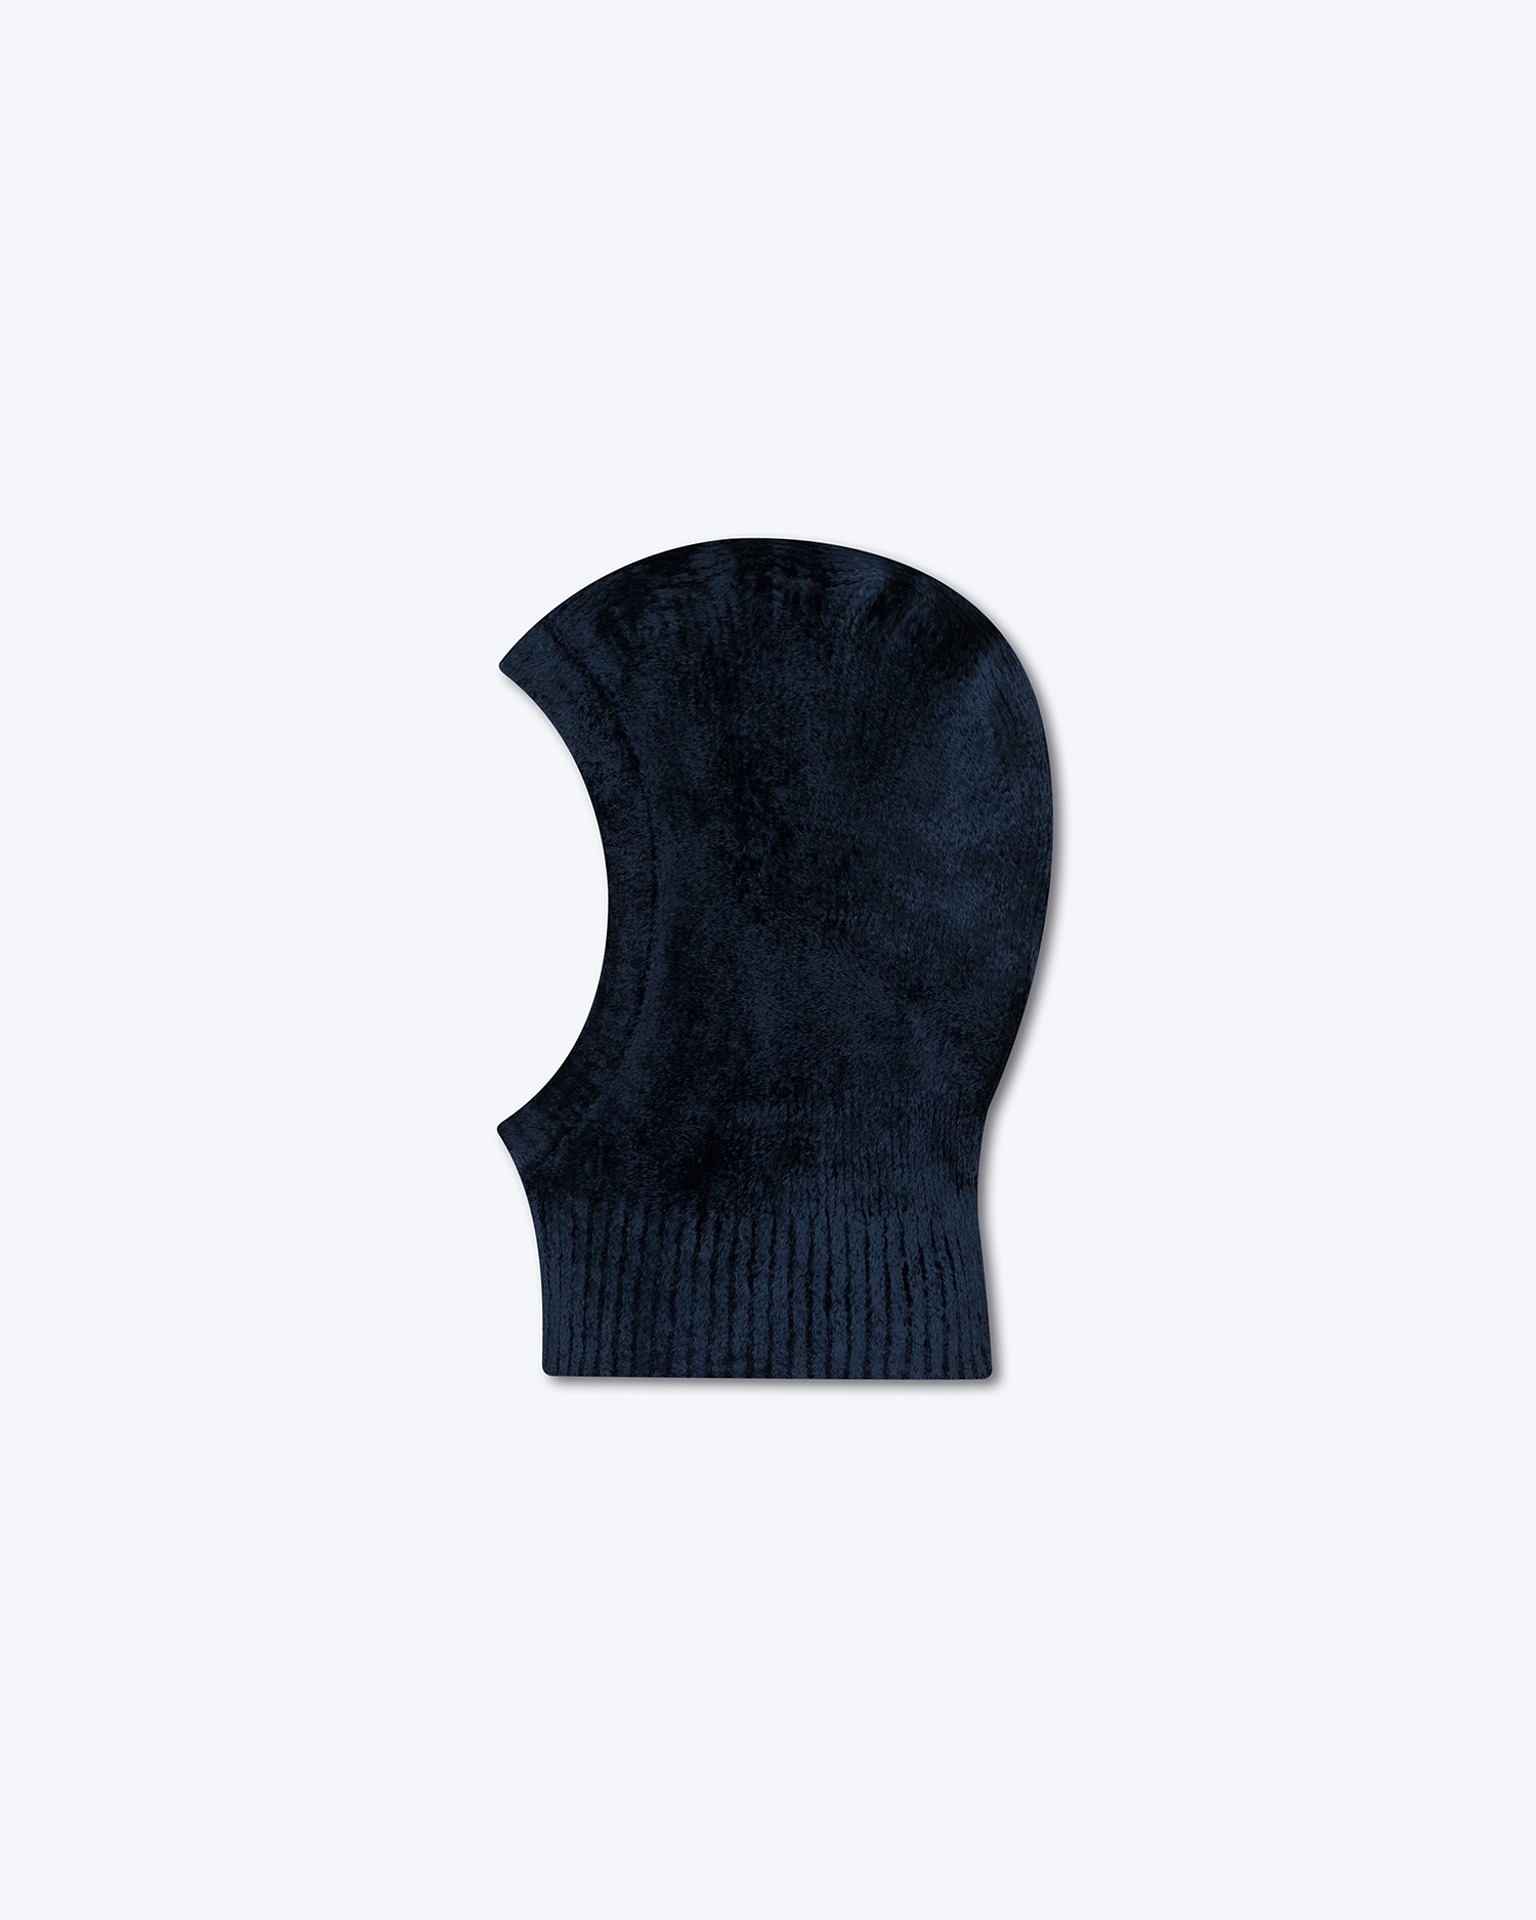 FILCO - Velour knit balaclava - Navy blue - 1